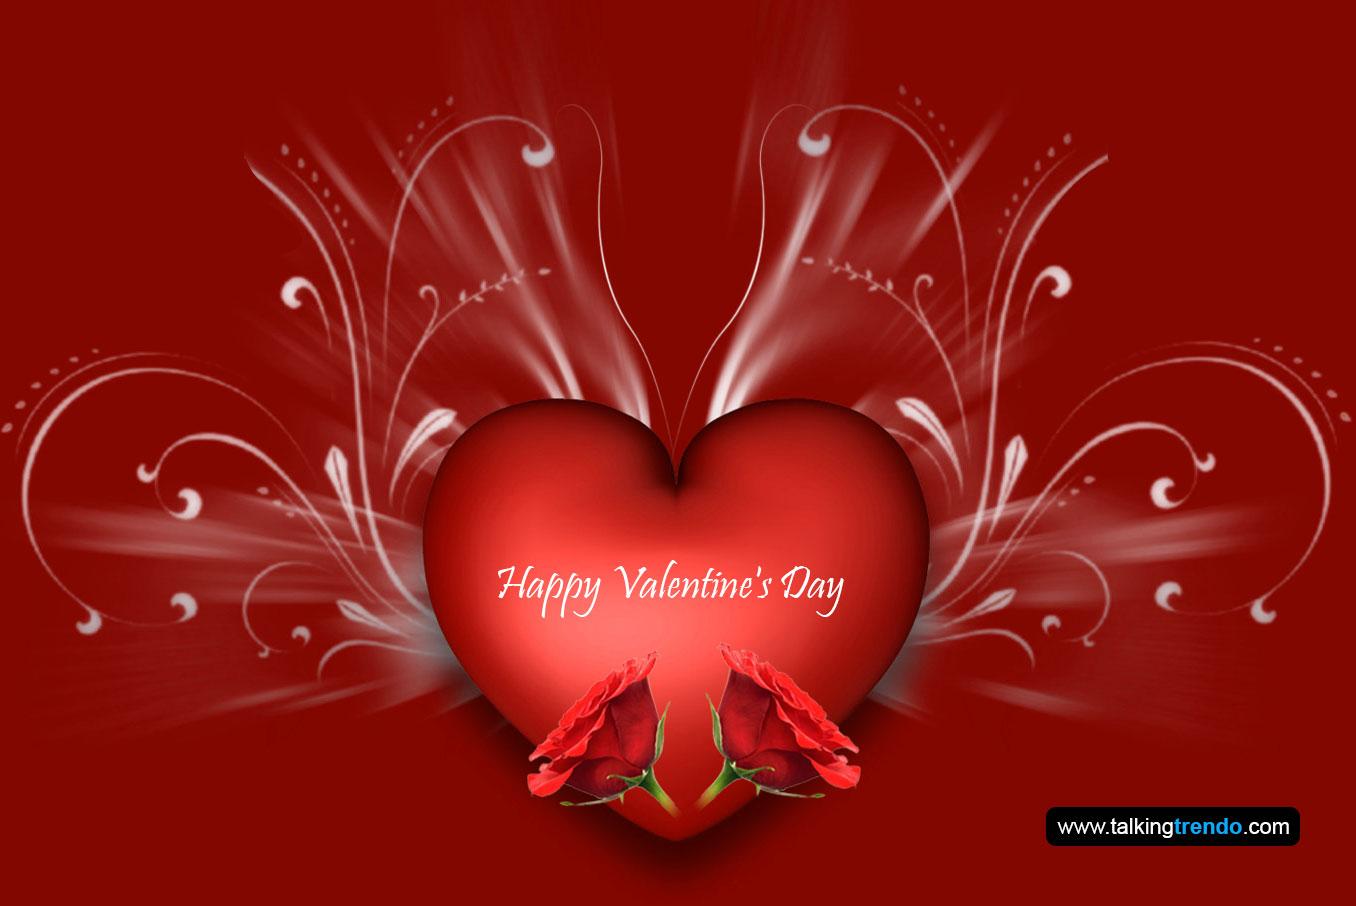 Happy Valentines Day Wallpaper 14 Feb Feb Valentine Day